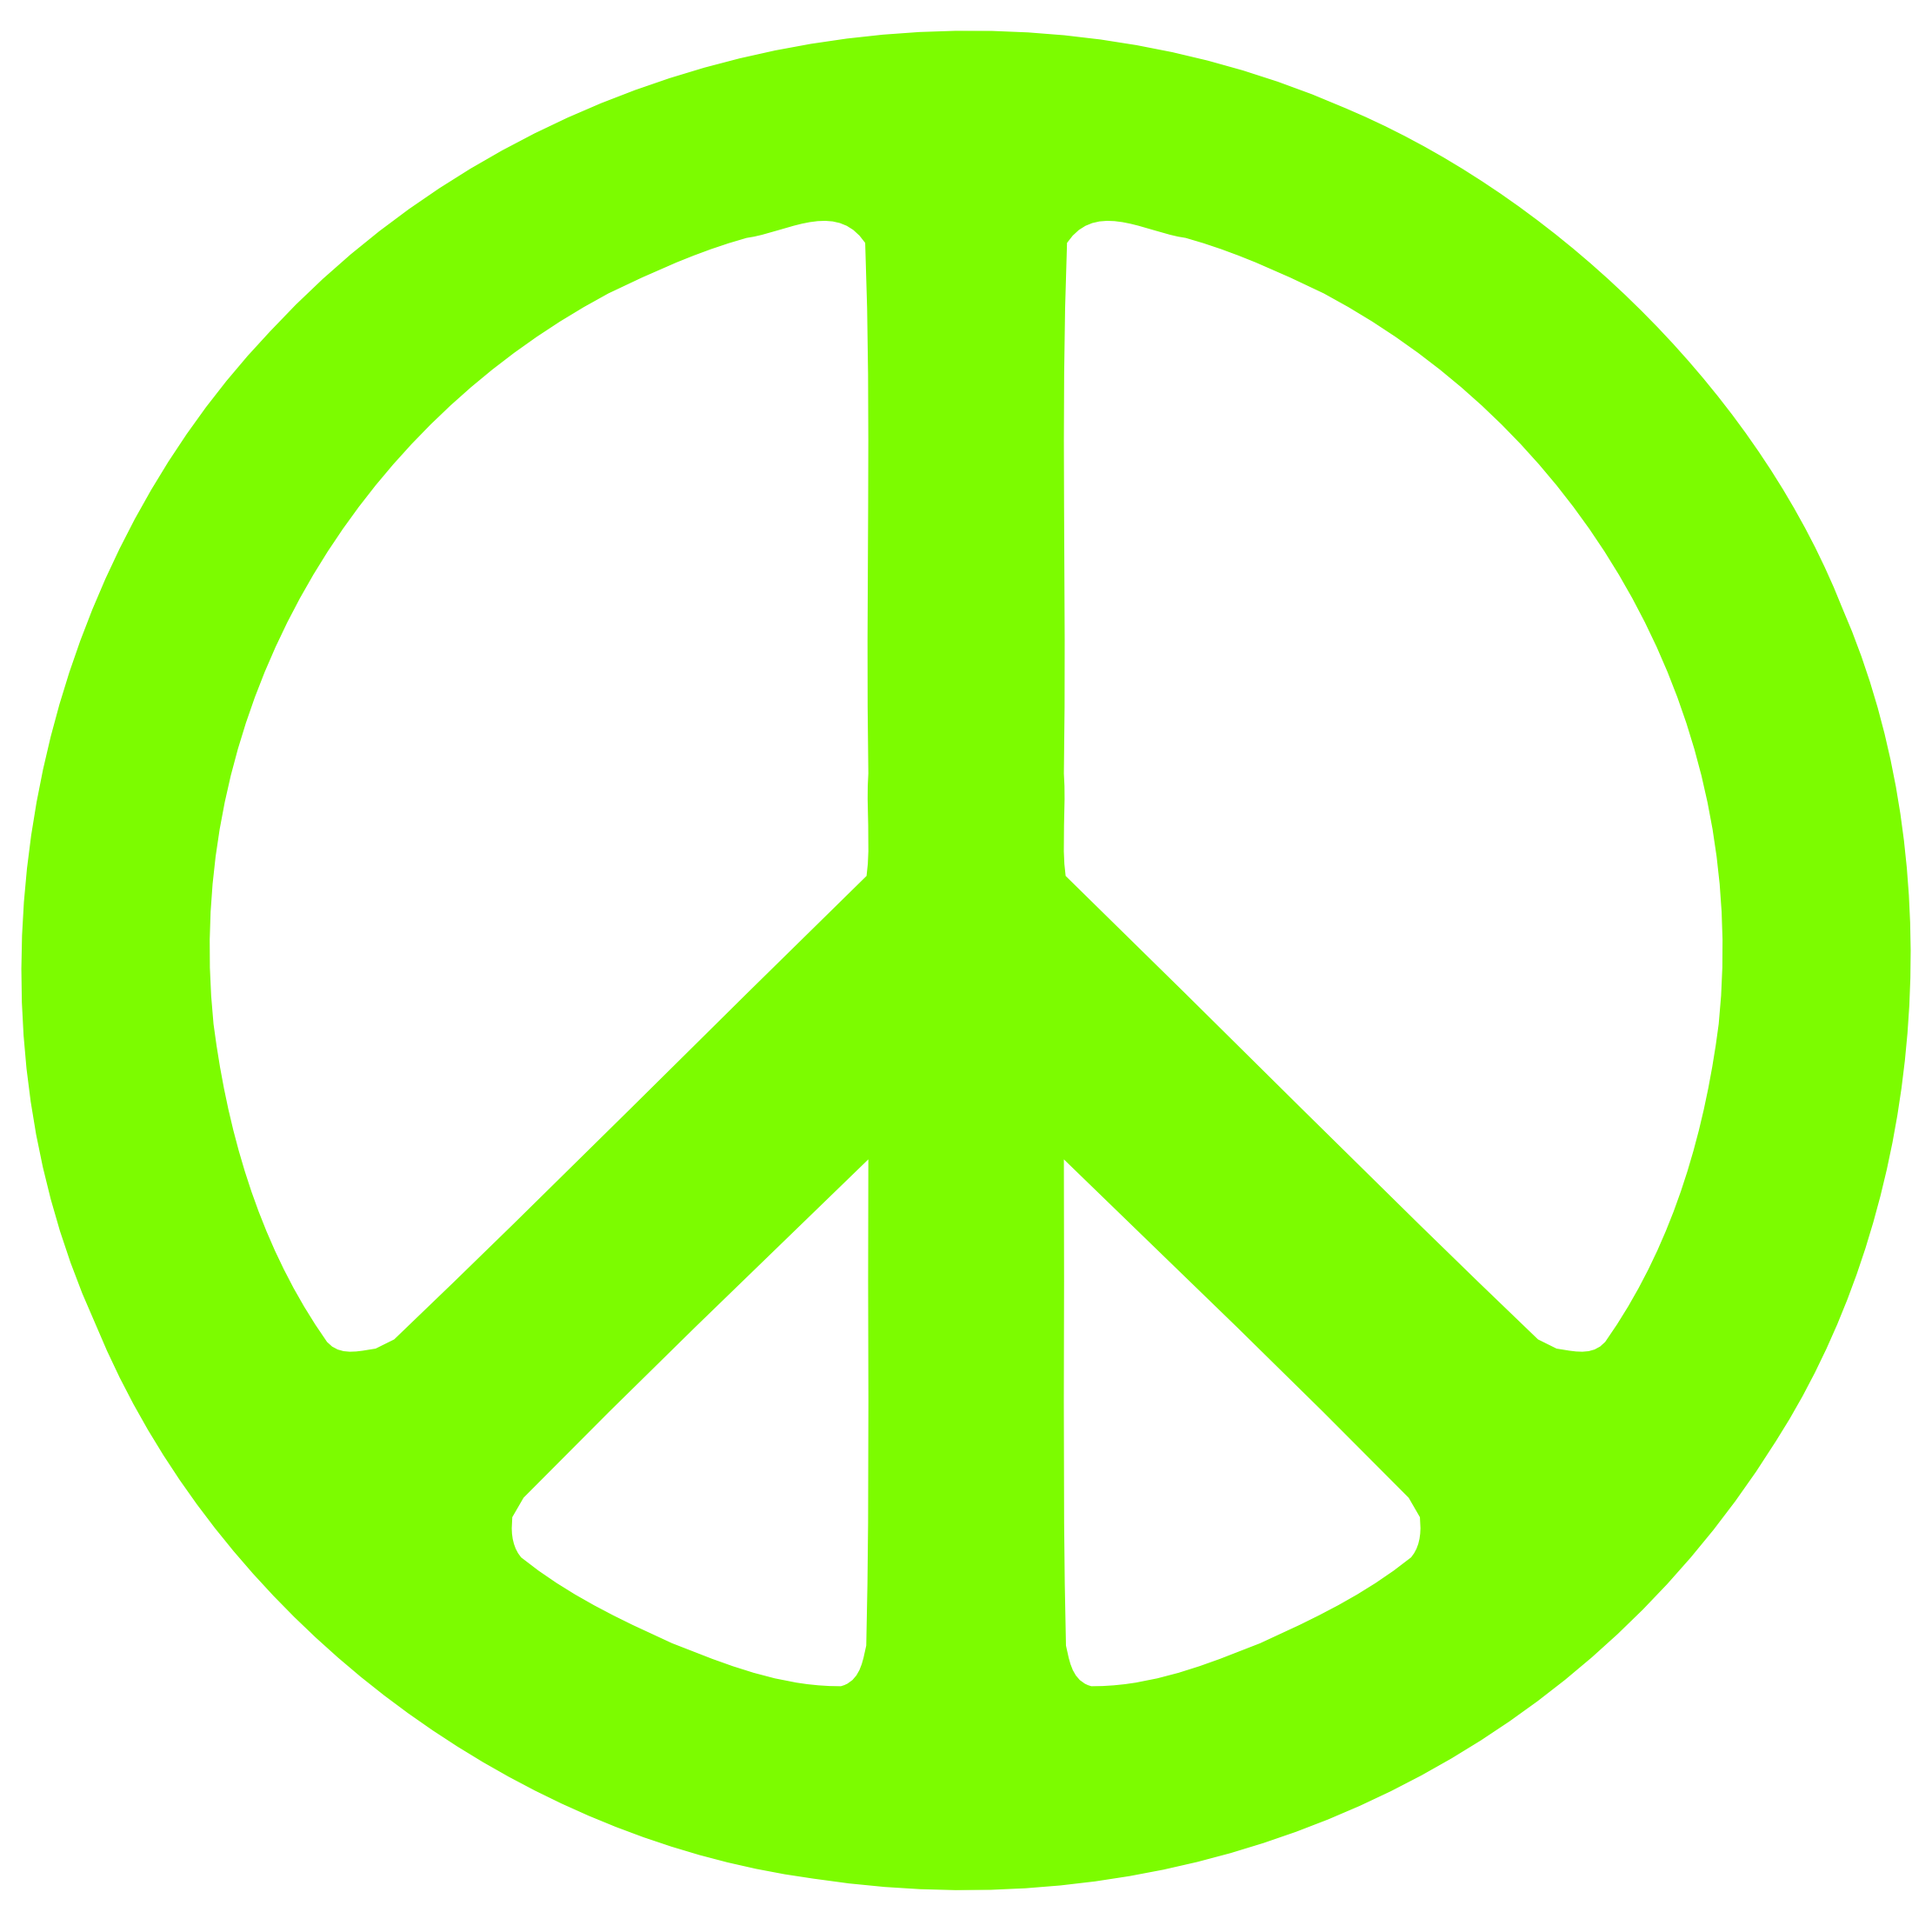 Lawn Green Peace Symbol 1 scallywag peacesymbol.org Peace Symbol ...